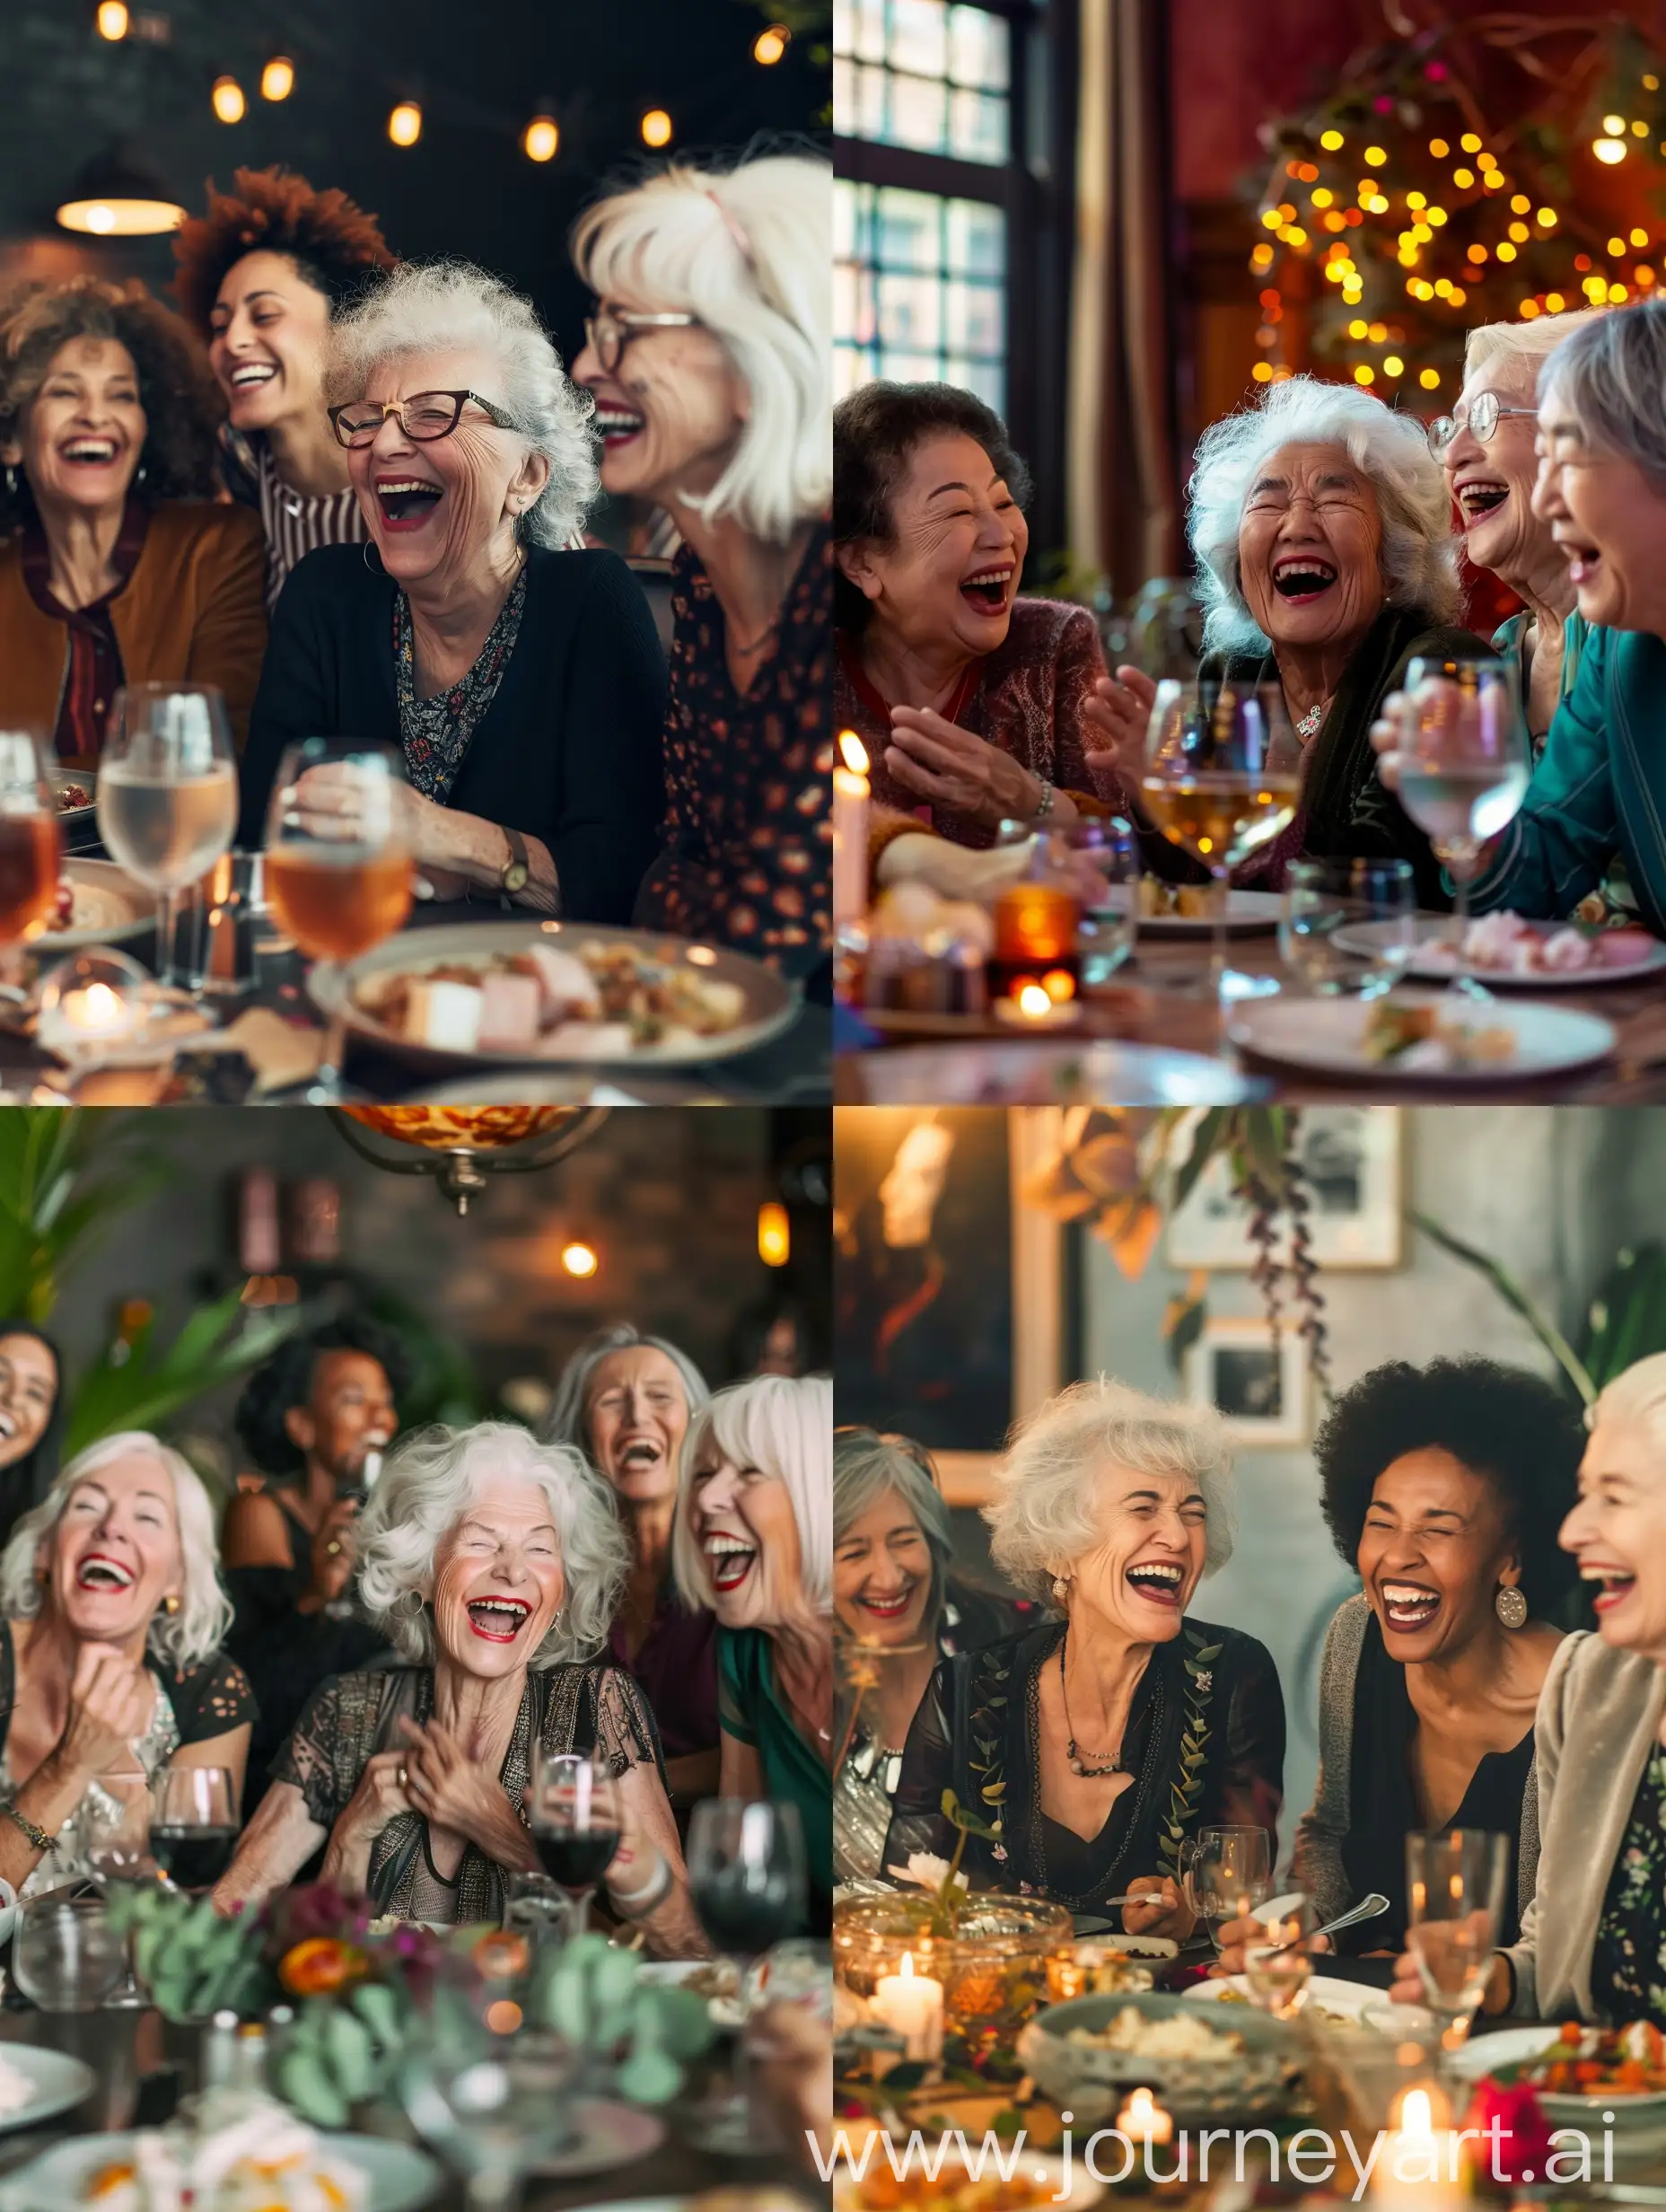 Empowered-Women-Celebrating-Joyfully-at-International-Womens-Day-Dinner-Party